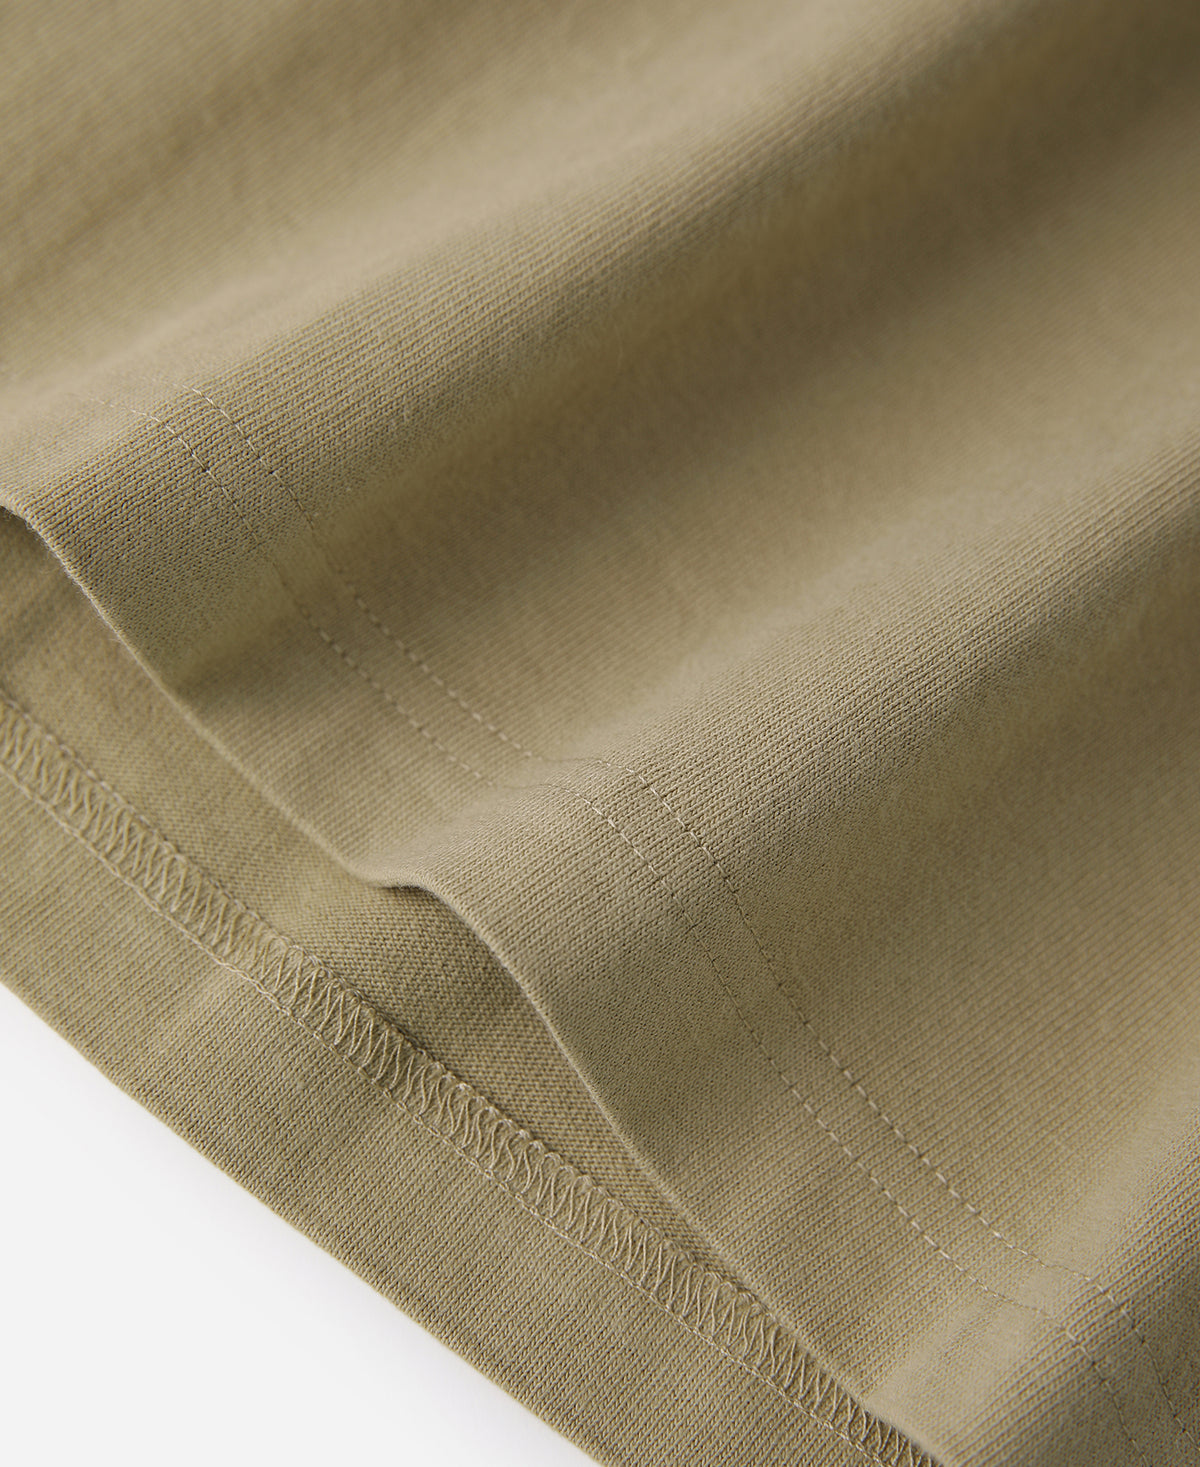 9 oz US Cotton Tubular T-Shirt - Sage Green